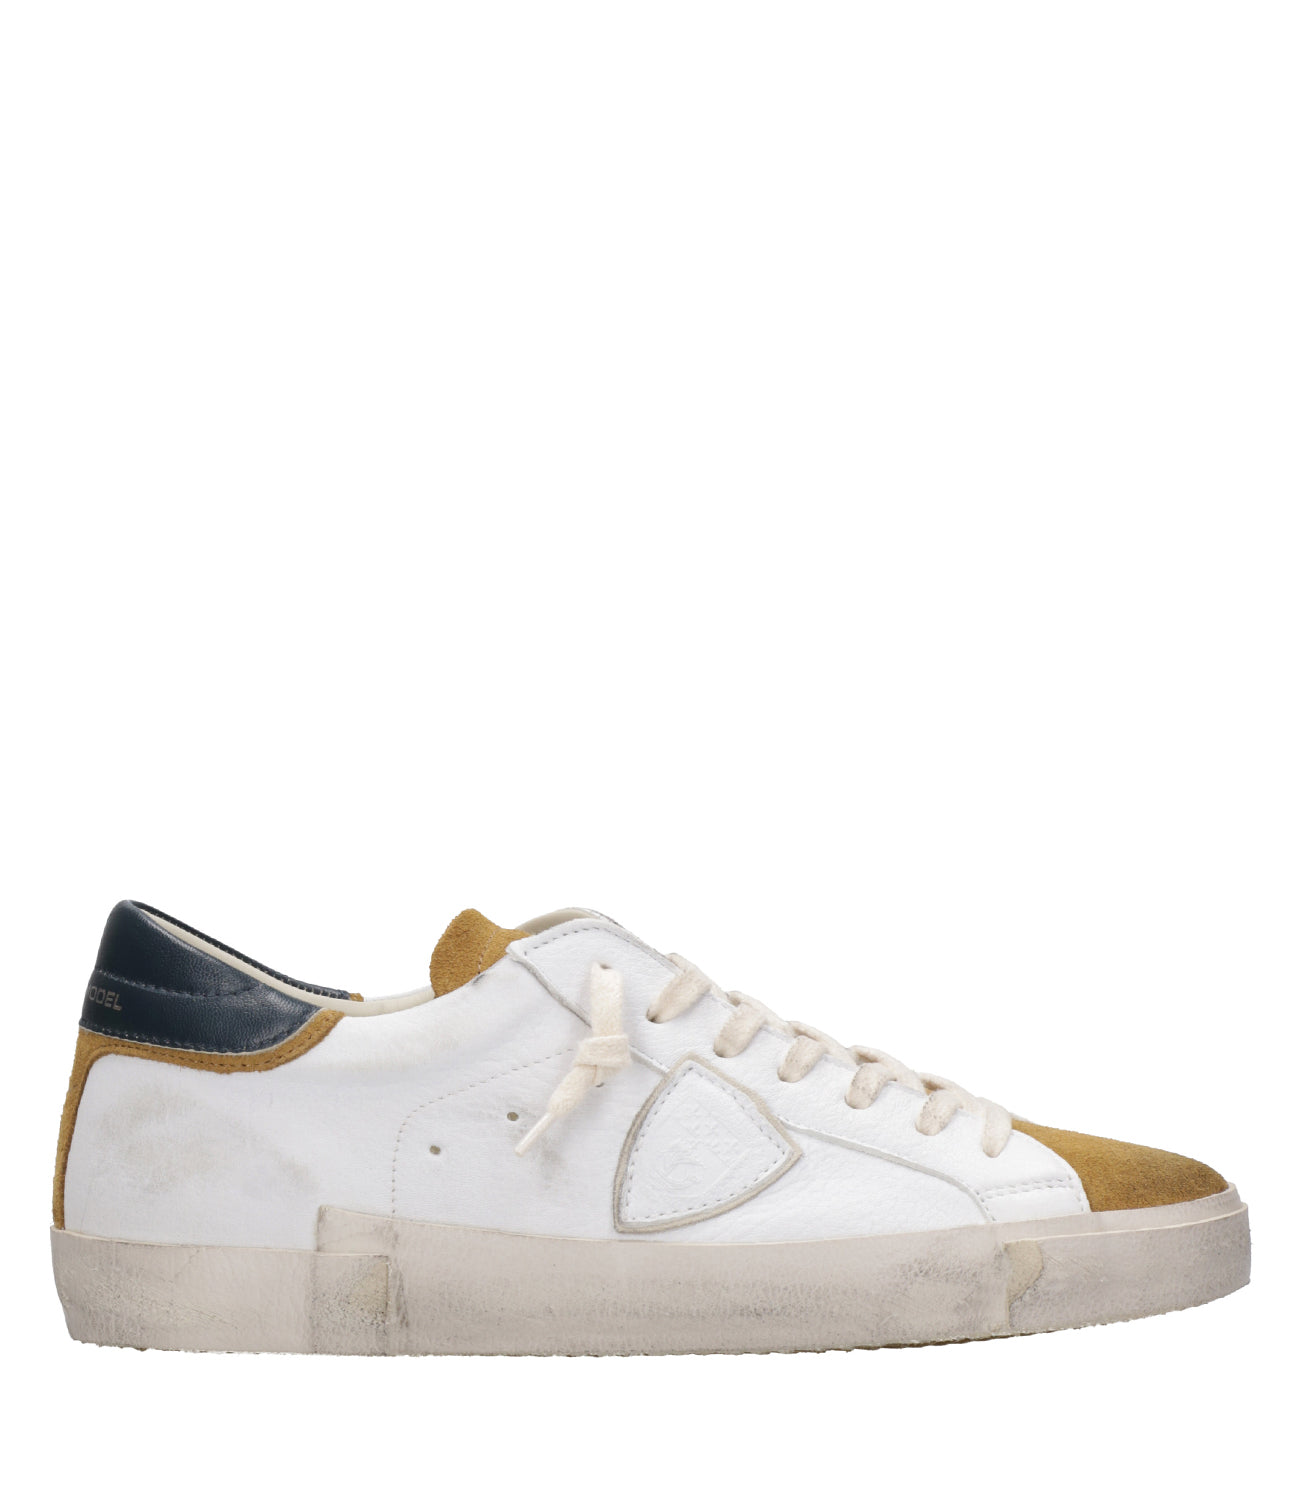 Philippe Model | Sneakers PRSX Low Bianco e Senape